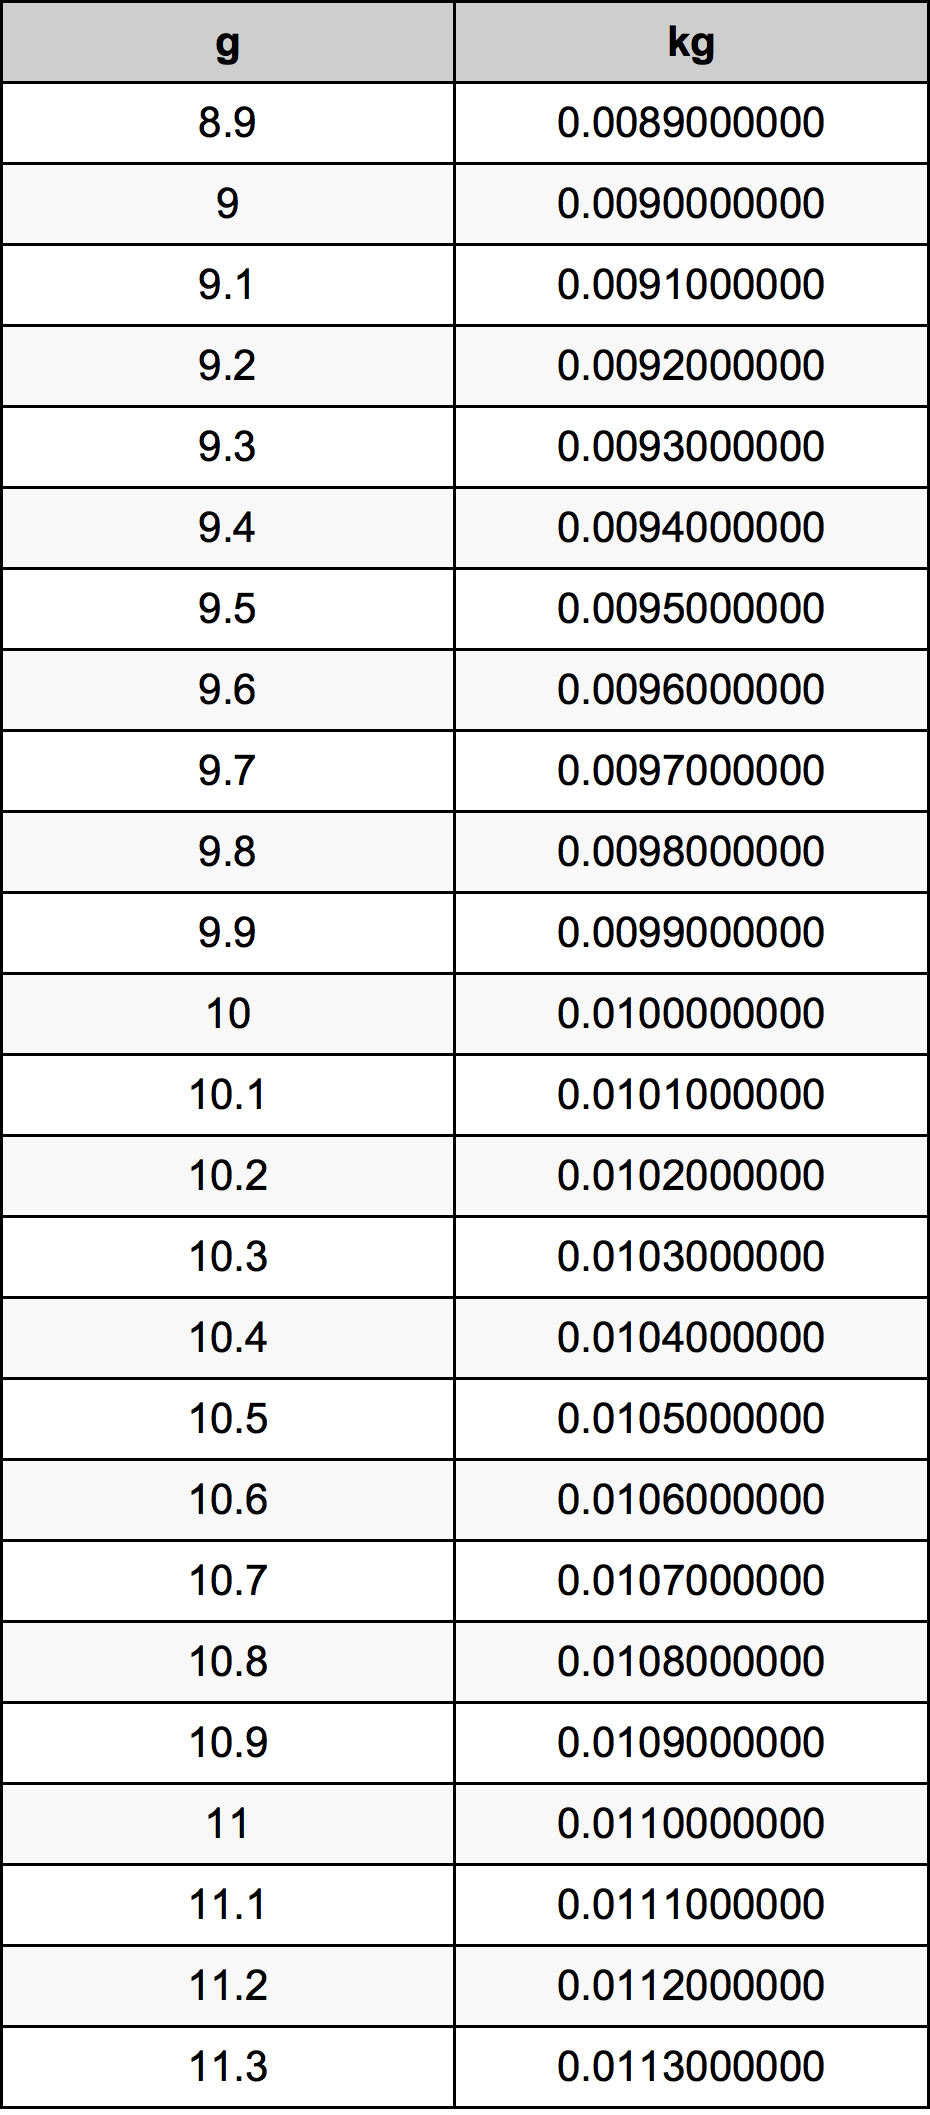 10.1 غرام جدول تحويل